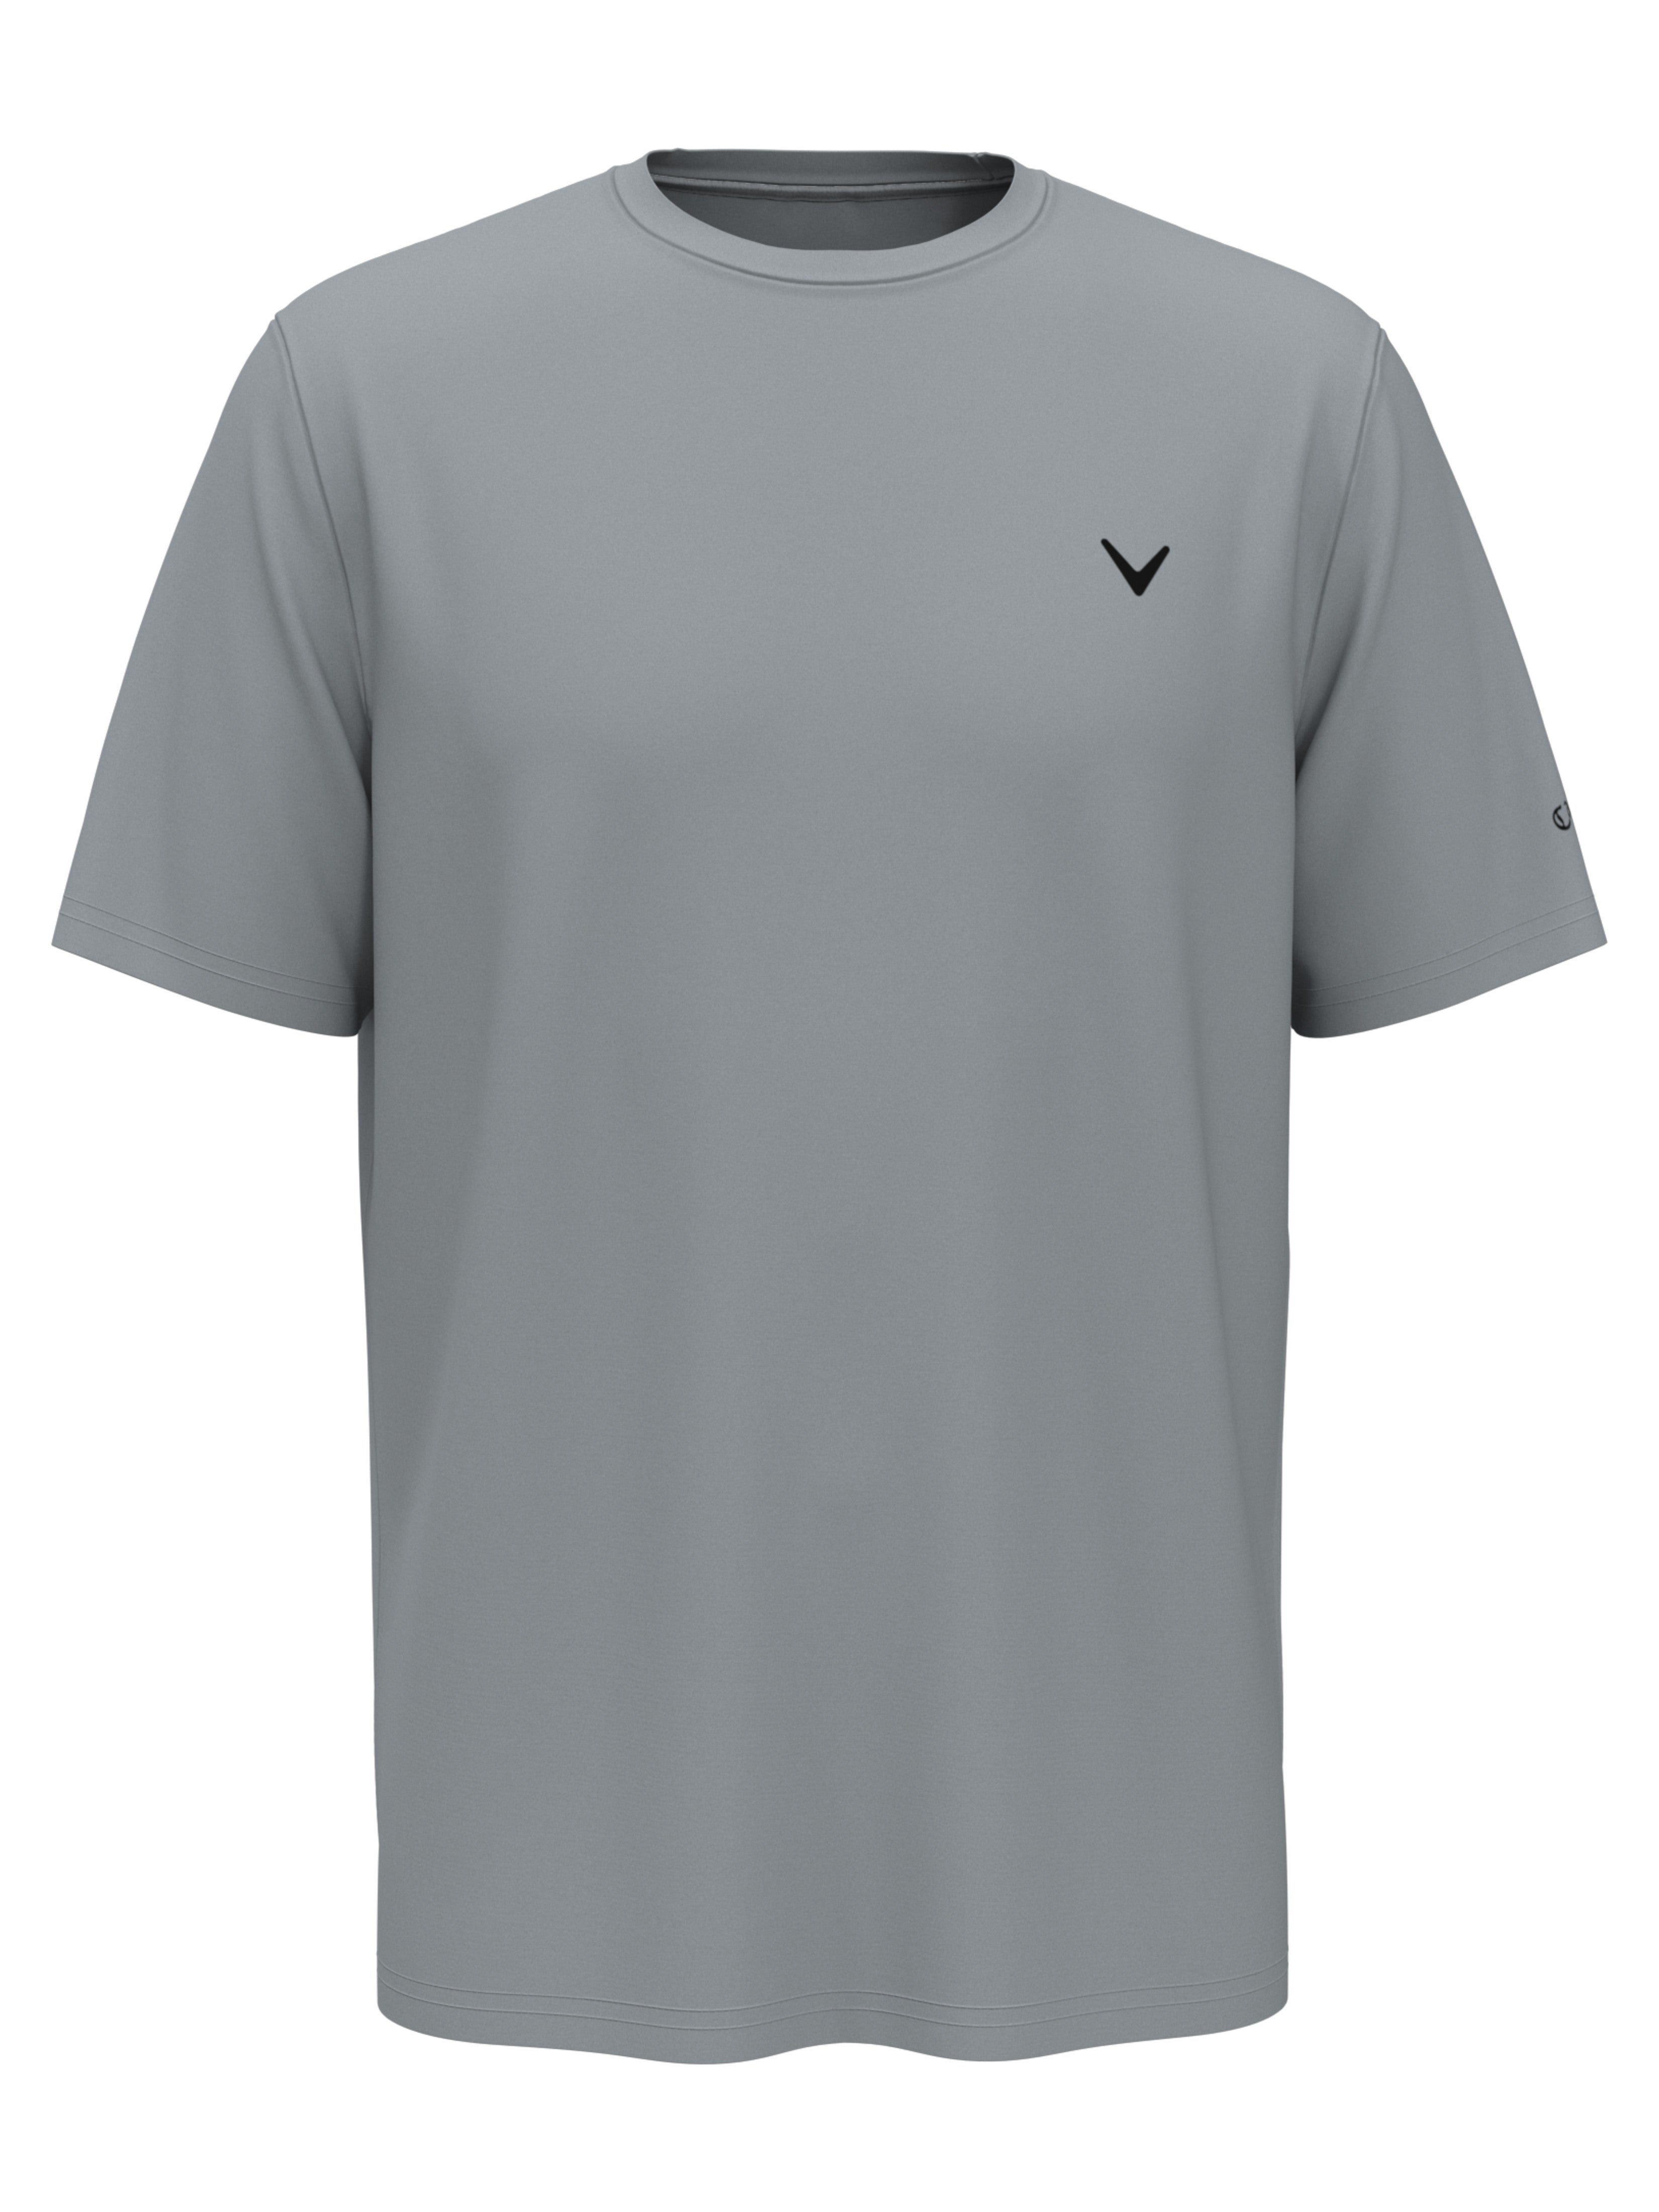  Nike Dri-Fit UV Solar Arm Sleeves - 1 Pair - Unisex - Adult  (Black, Adult S/M) : Clothing, Shoes & Jewelry